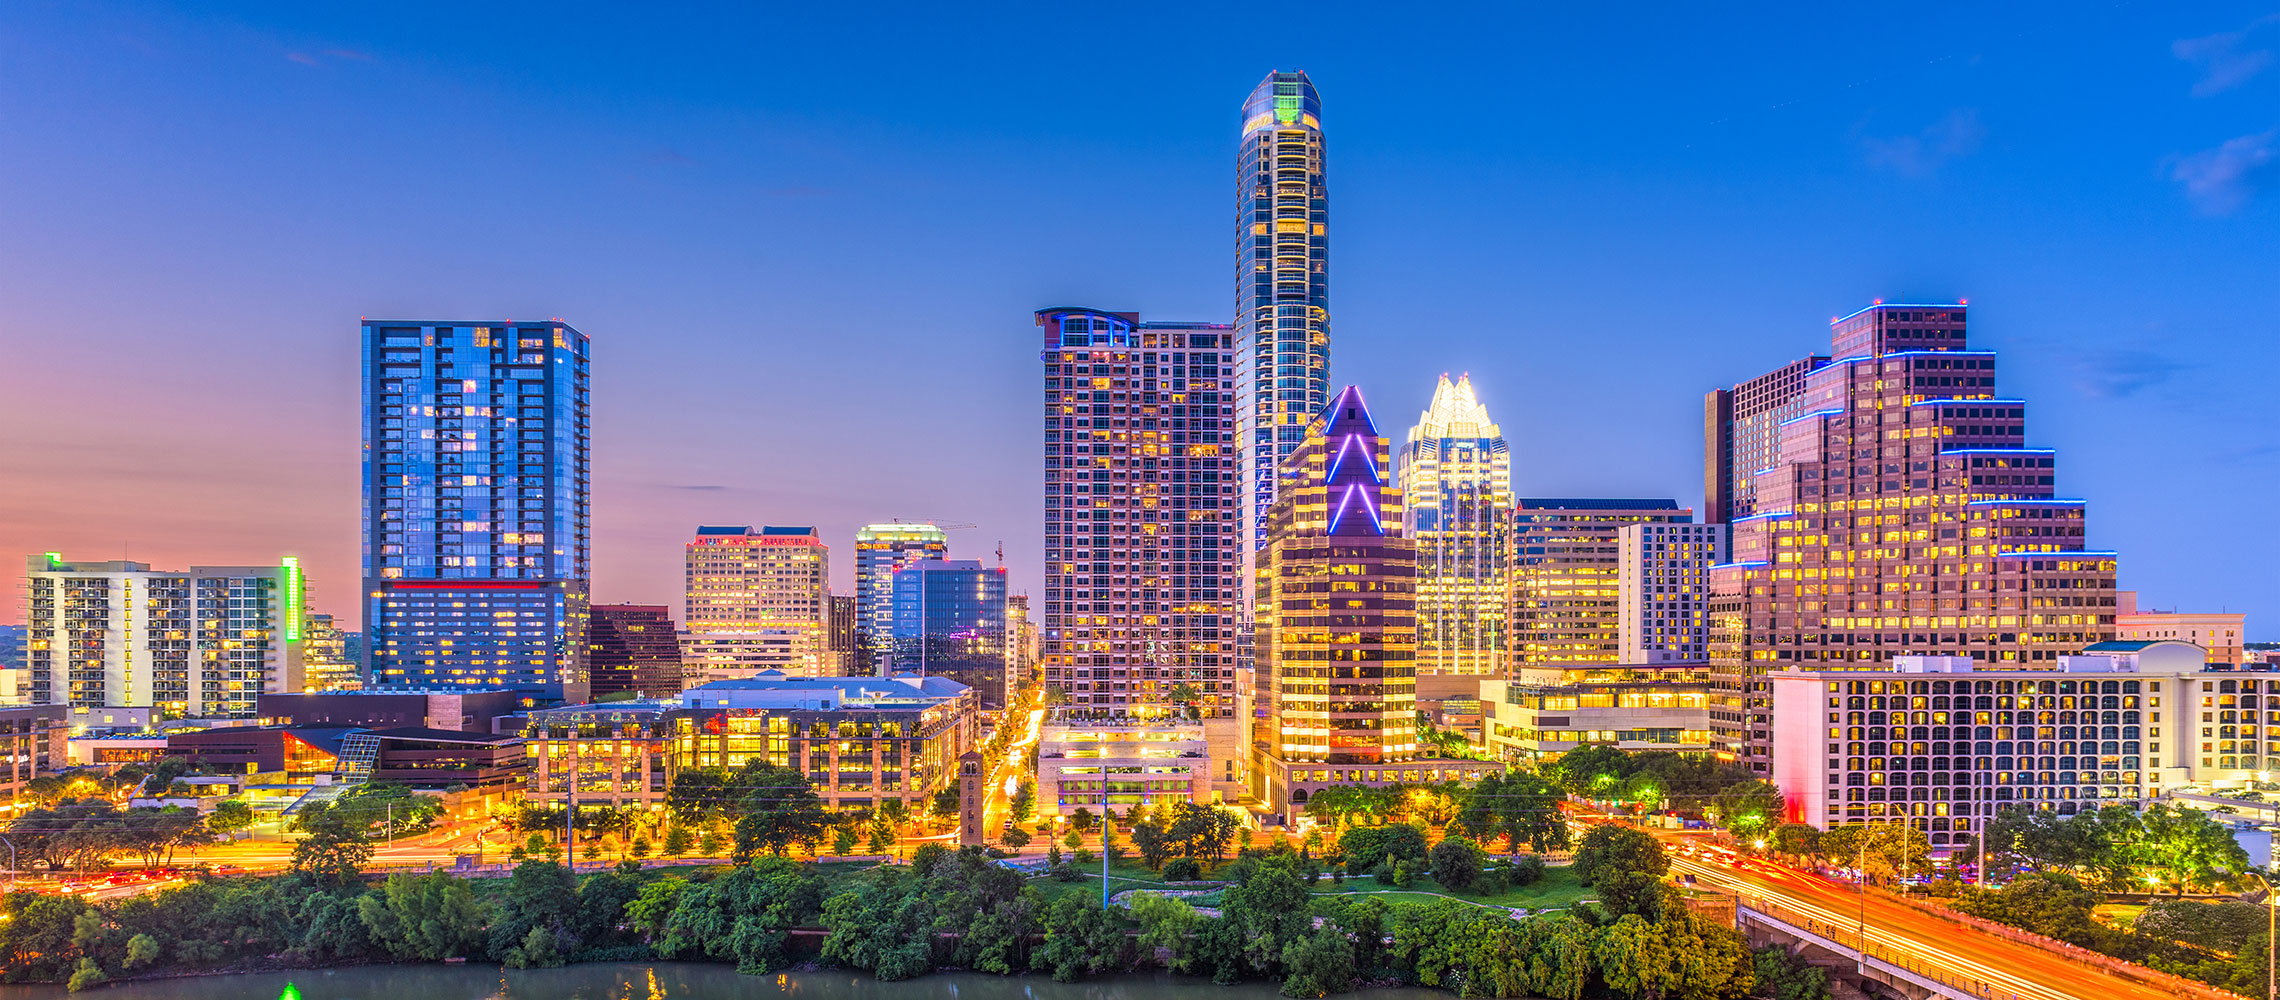 Austin, TX city skyline at night